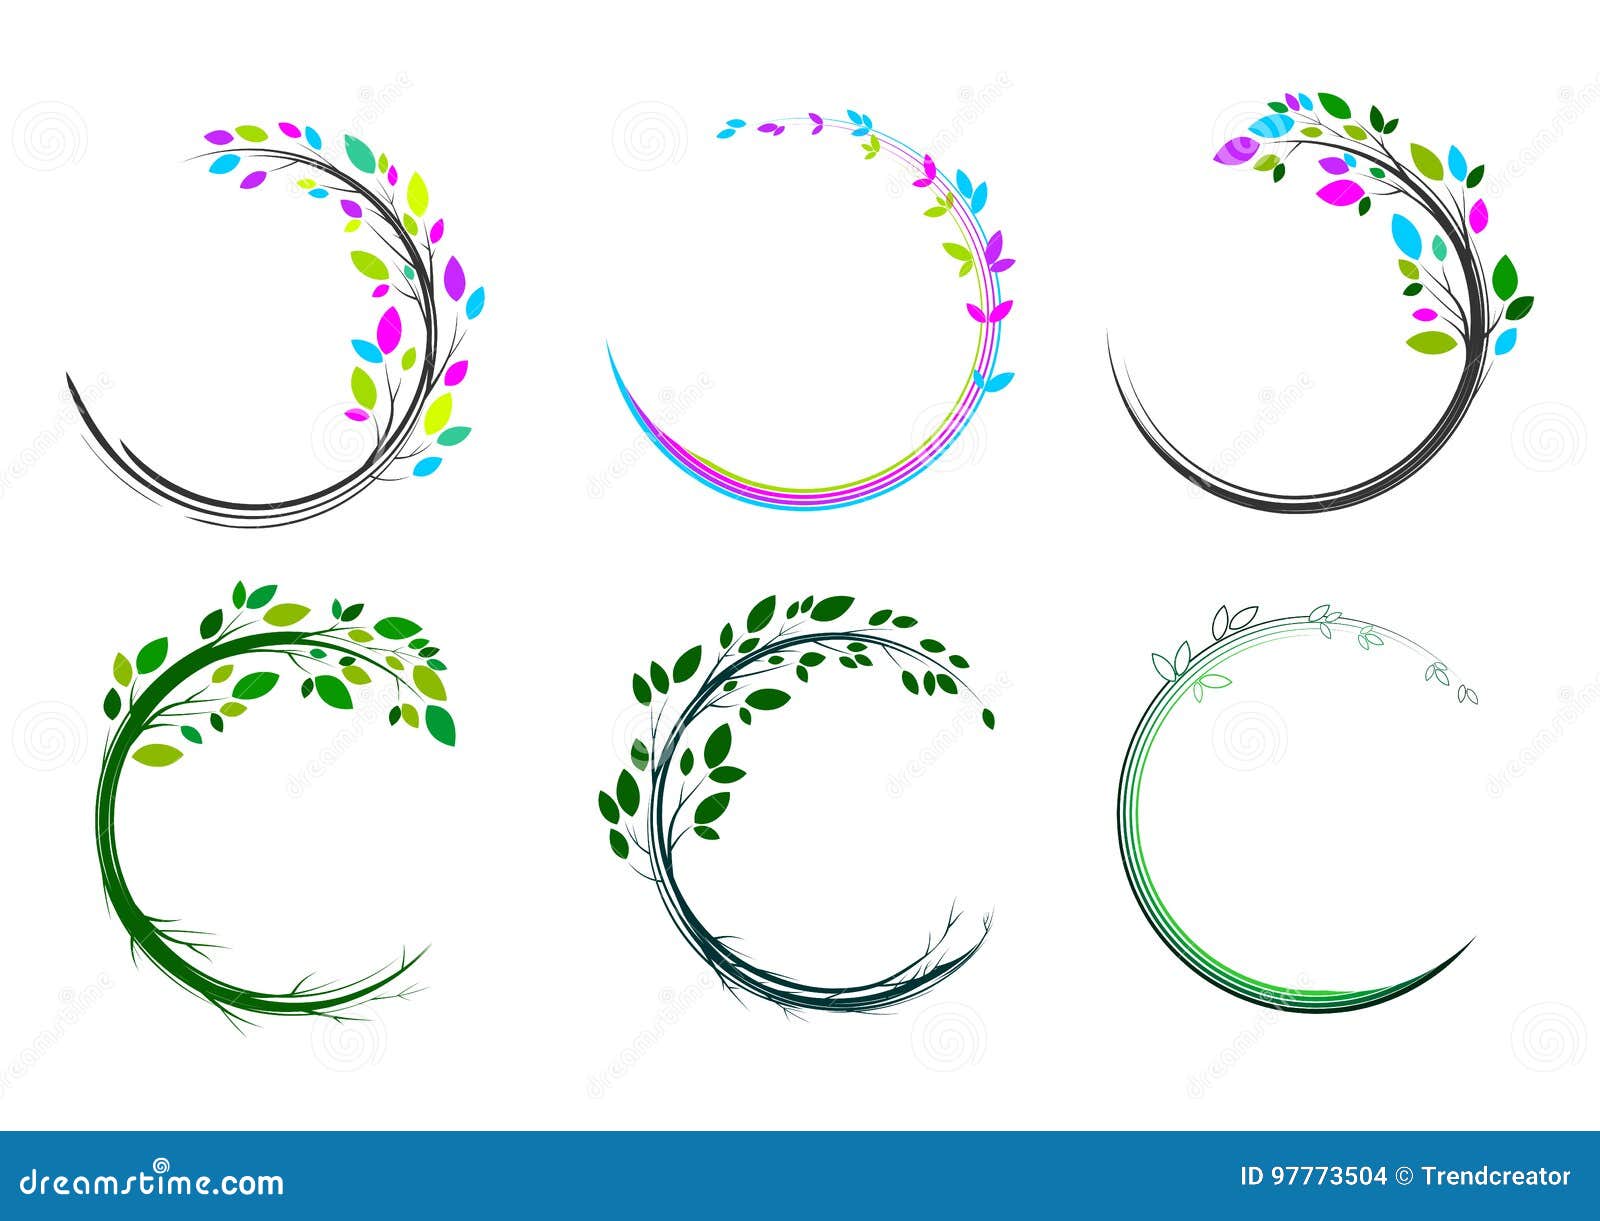 leaf circle logo,spa,massage,grass,icon,plant,education,yoga,health, and nature concept 